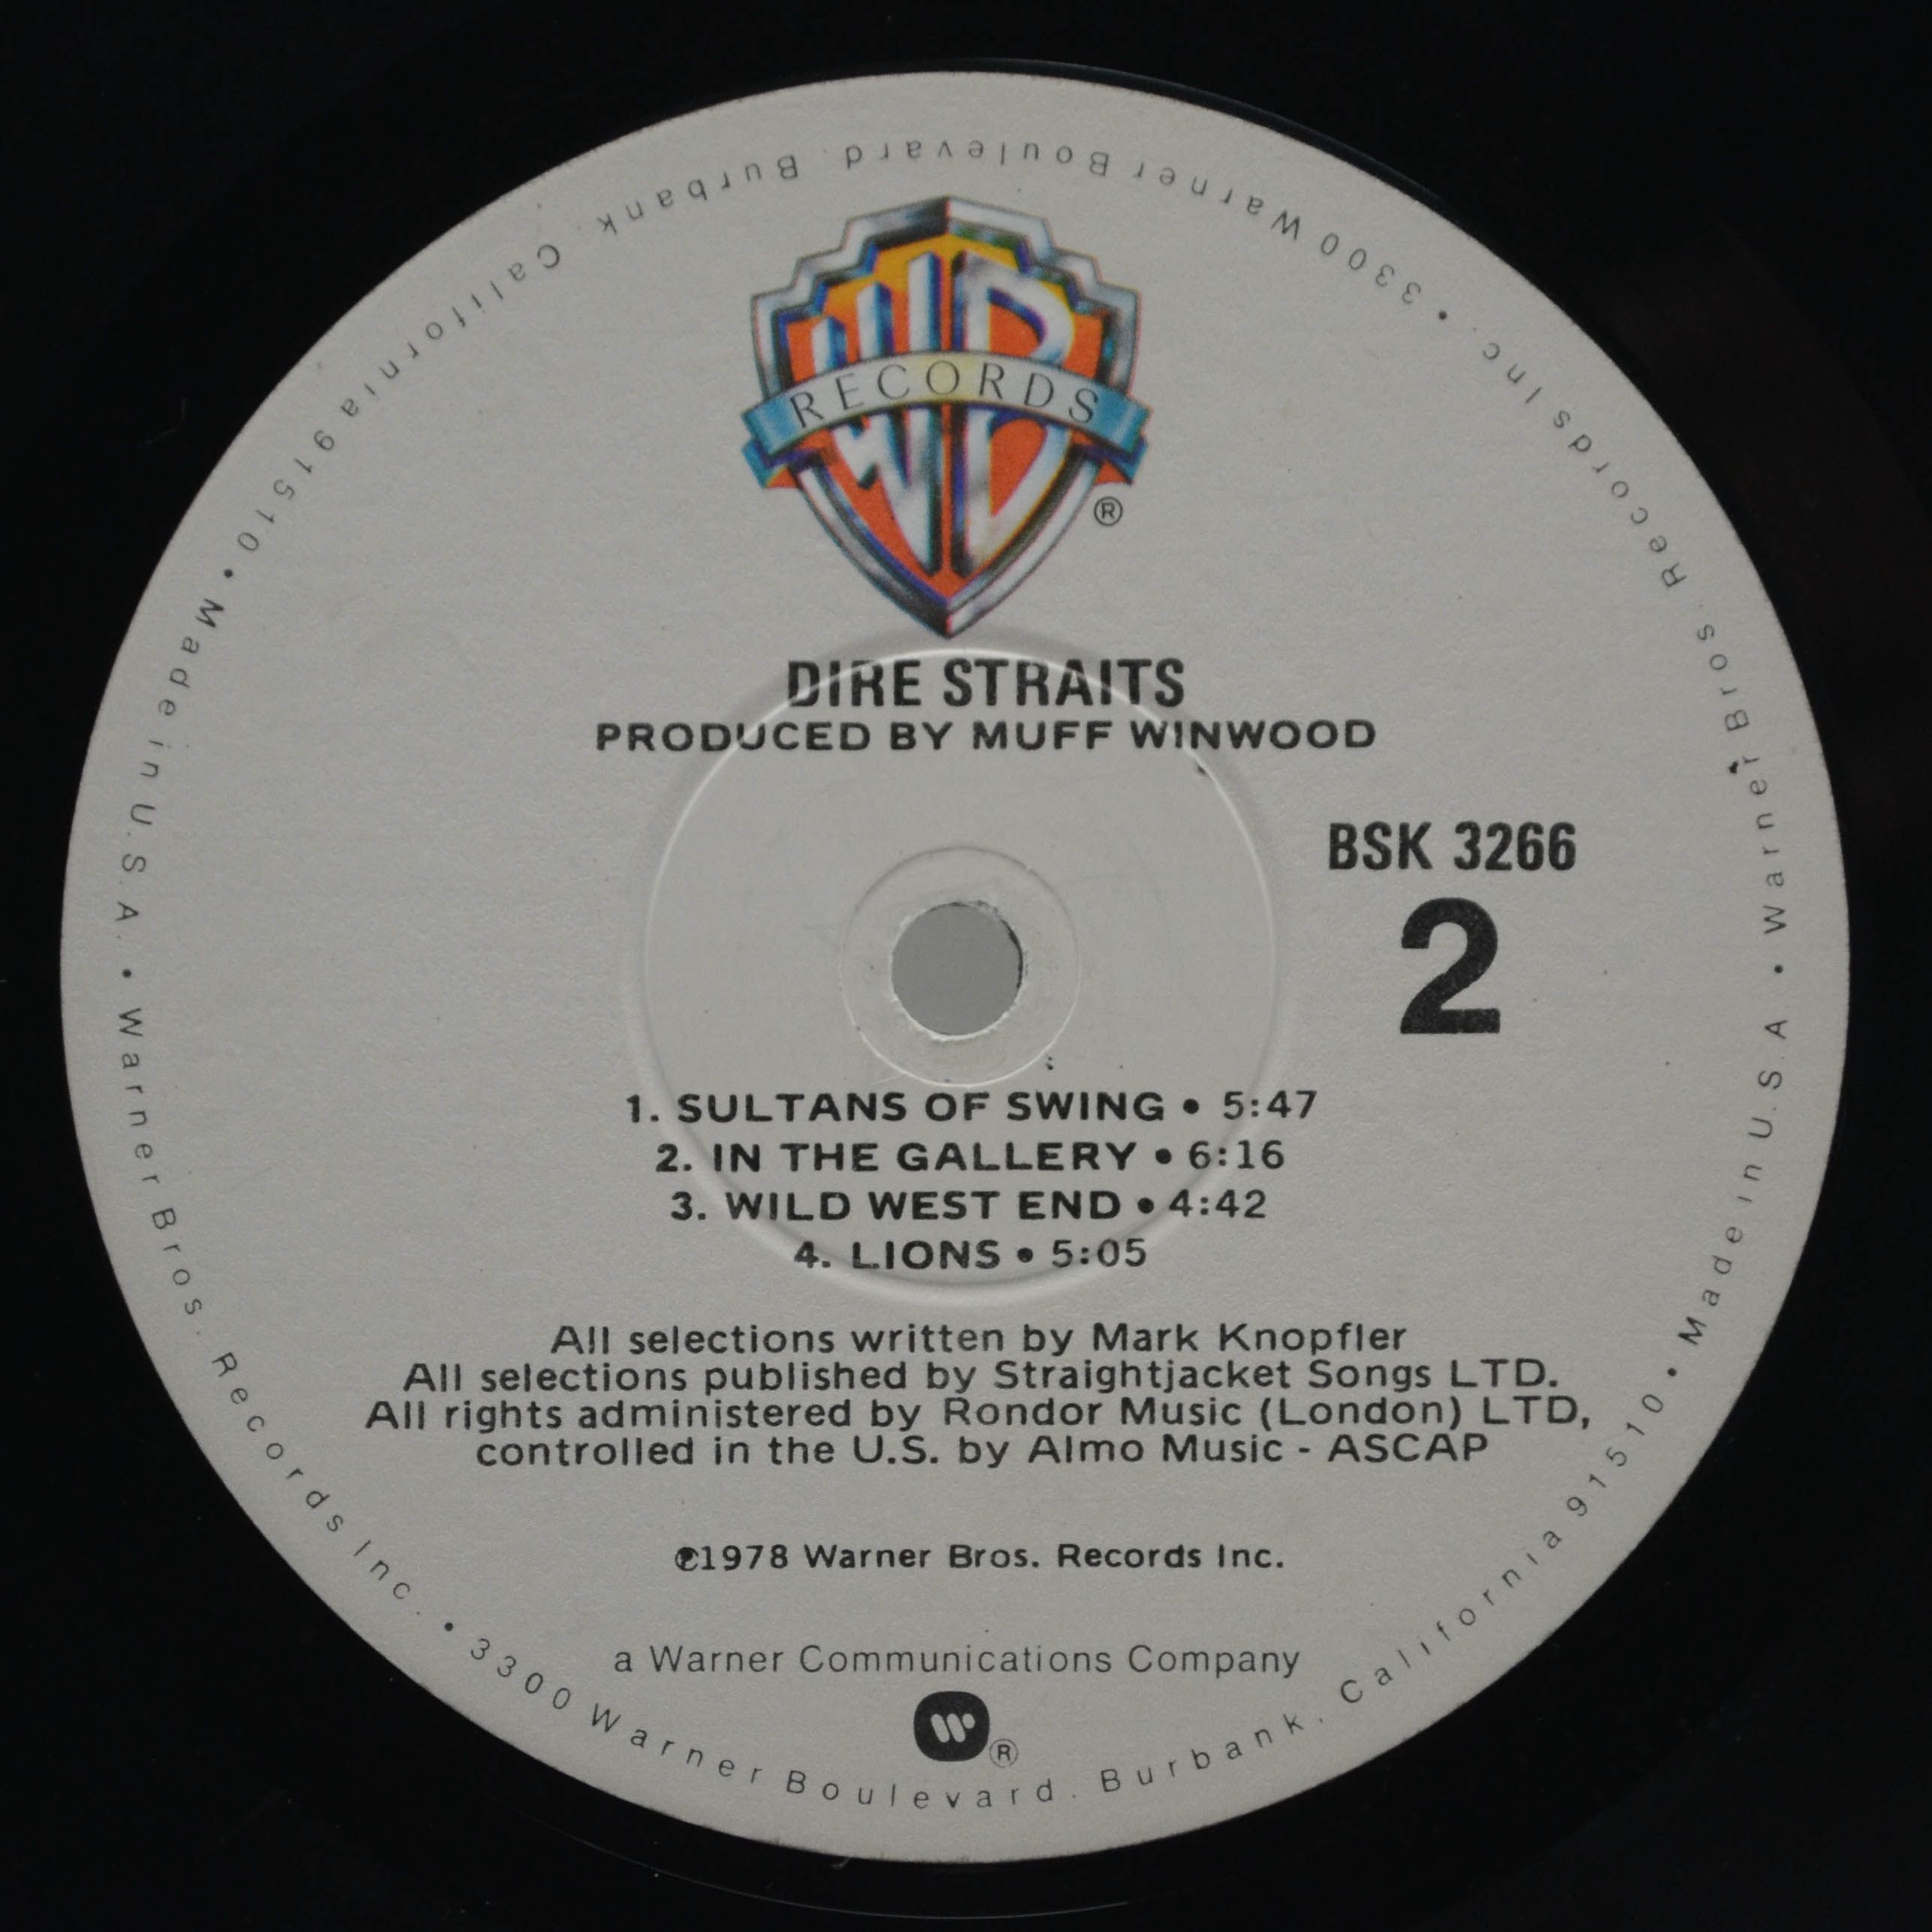 Dire Straits — Dire Straits (USA), 1978